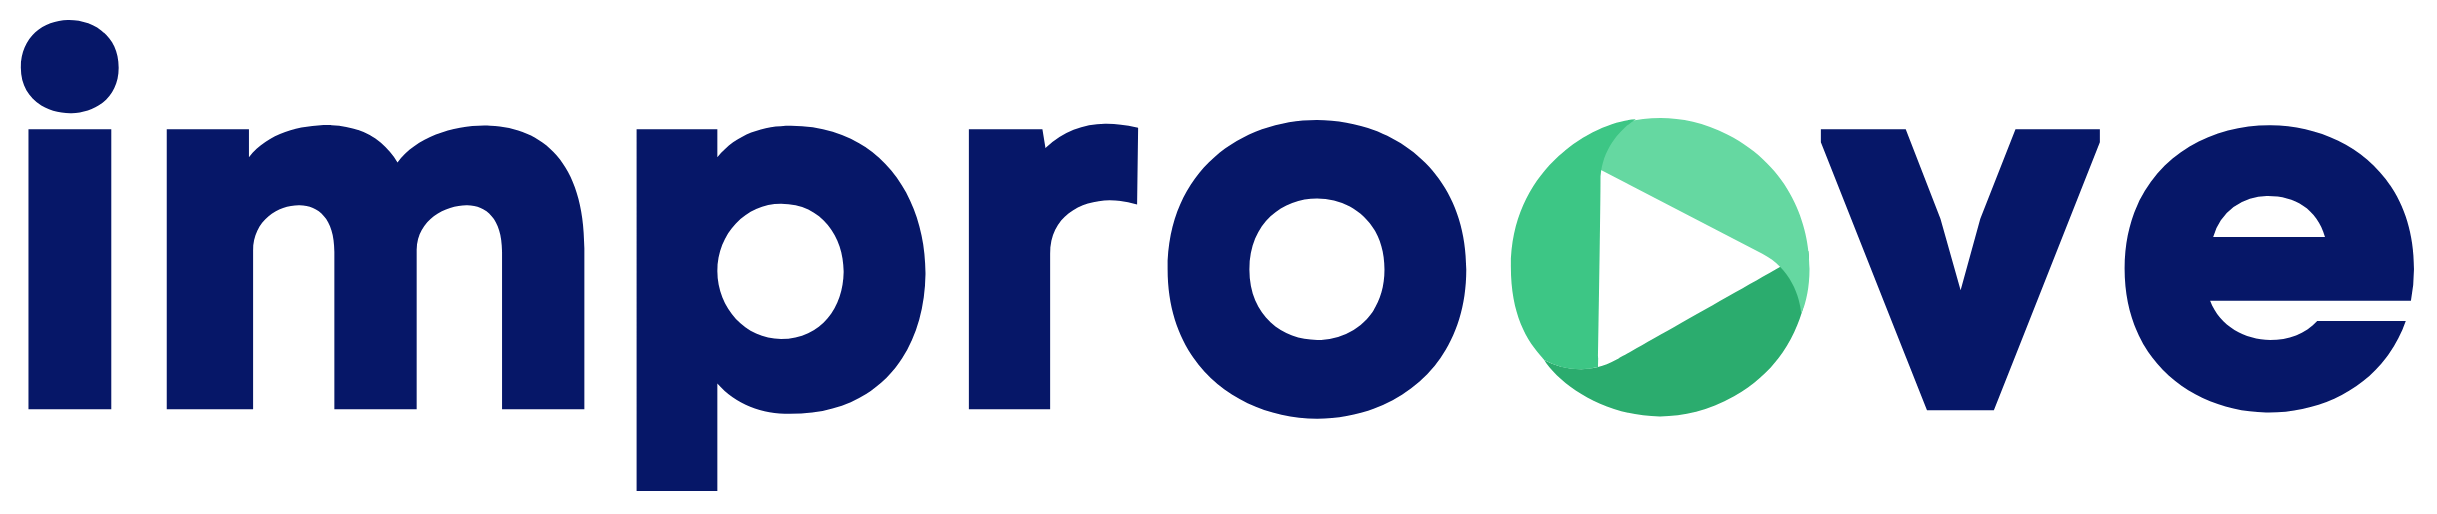 Logo Web Day